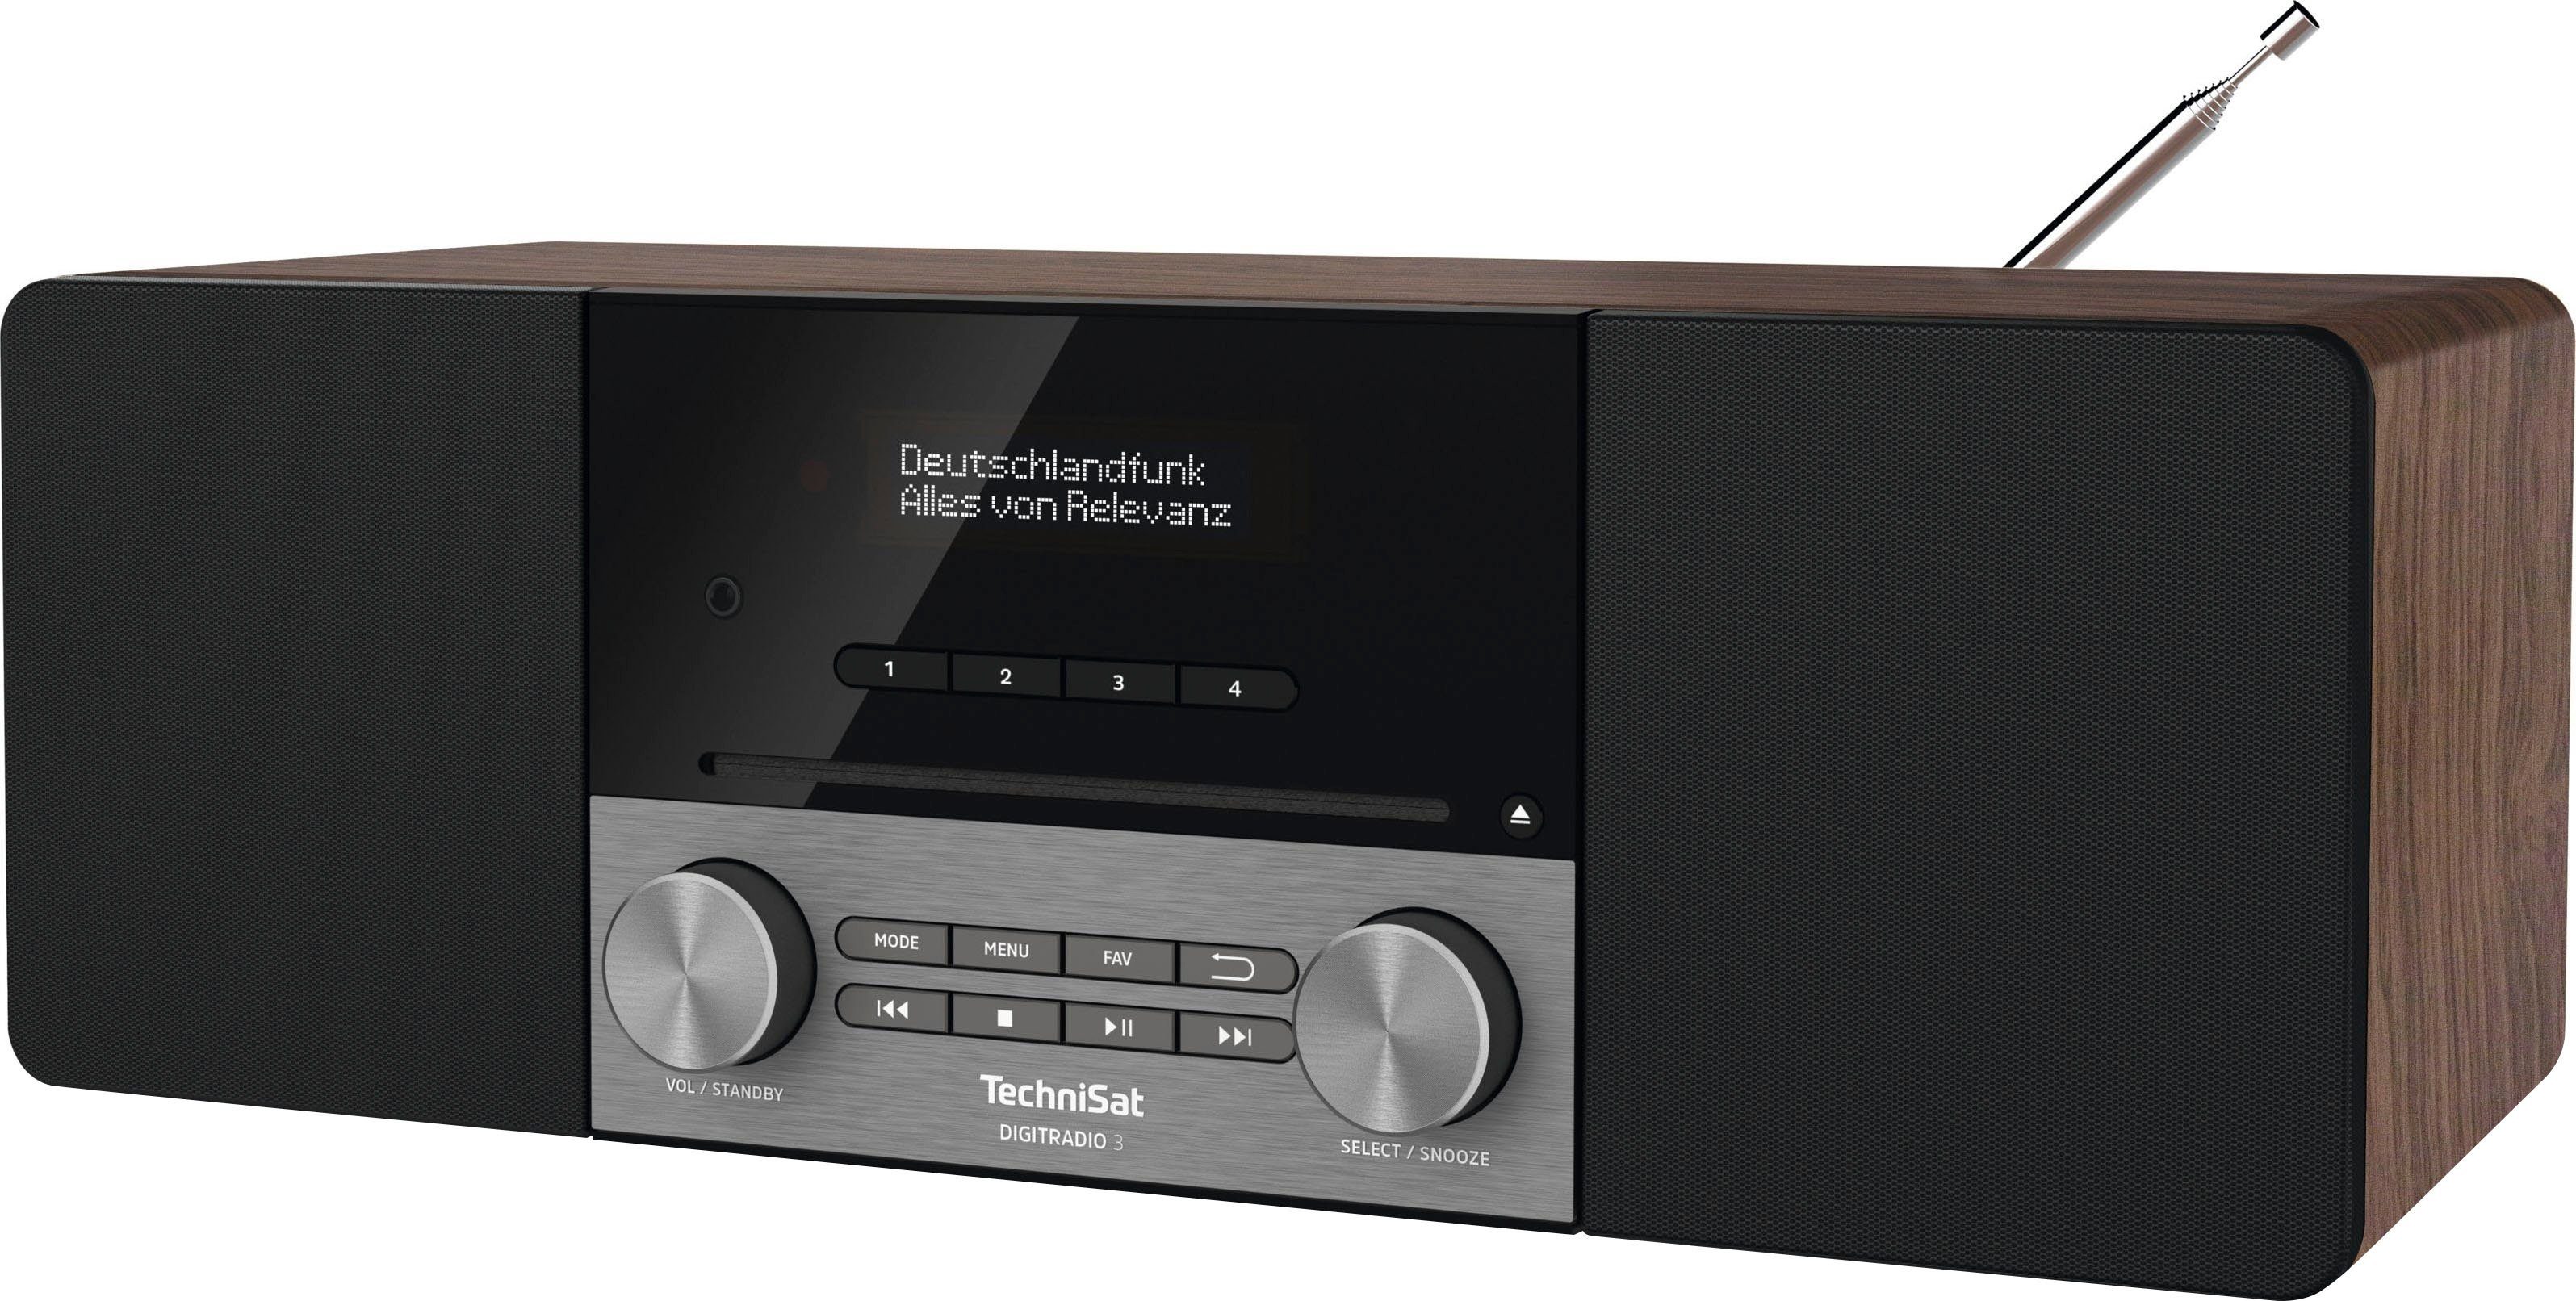 TechniSat DIGITRADIO (DAB), Made in 20 W, Nussbaum (DAB) UKW RDS, mit Germany) CD-Player, (Digitalradio 3 Digitalradio